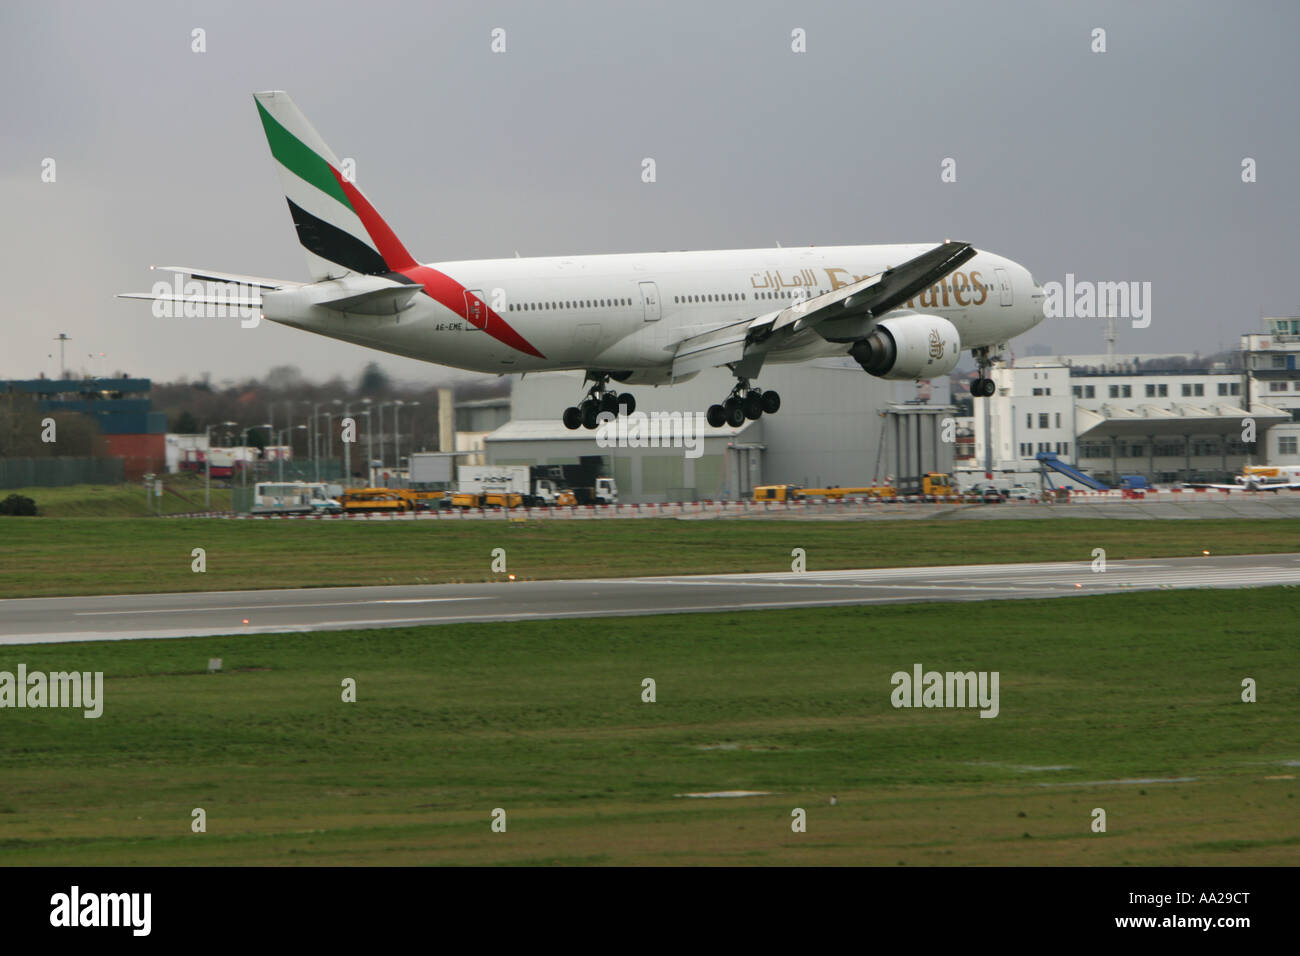 Emirates boeing 777 landing at Birmingham airport Stock Photo